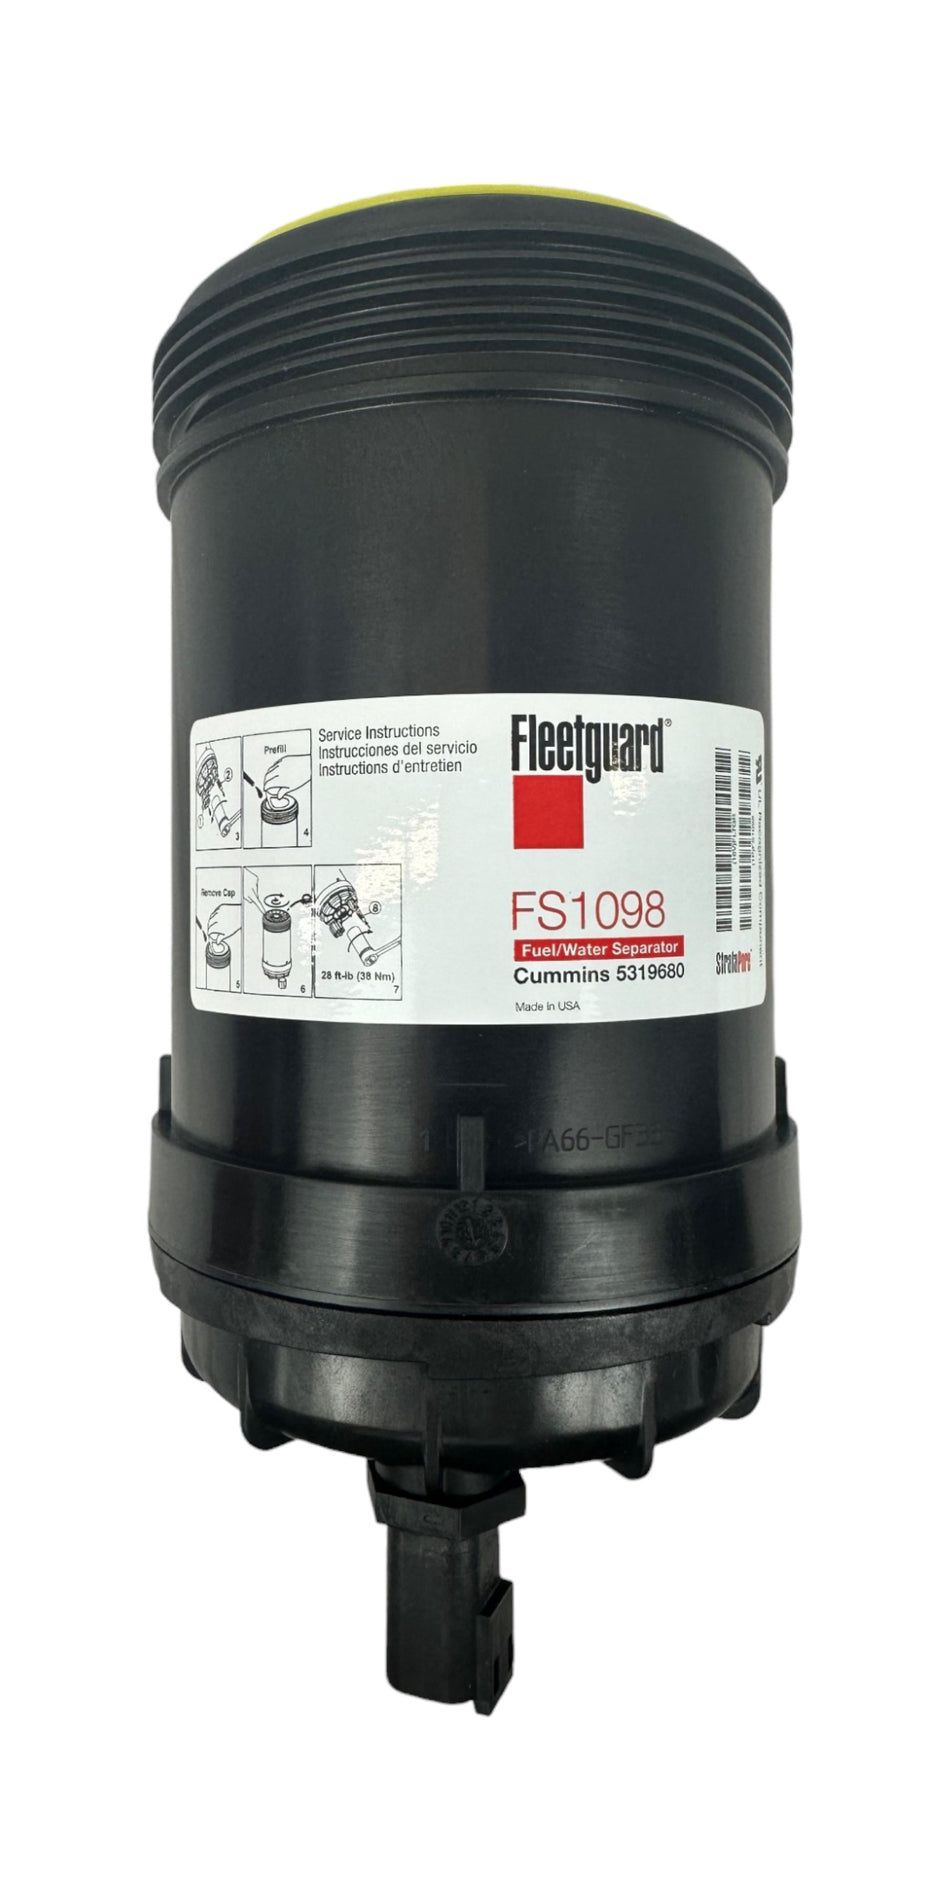 Fleetguard FS1098 Fuel Water Separator Replaces Cummins 5319680